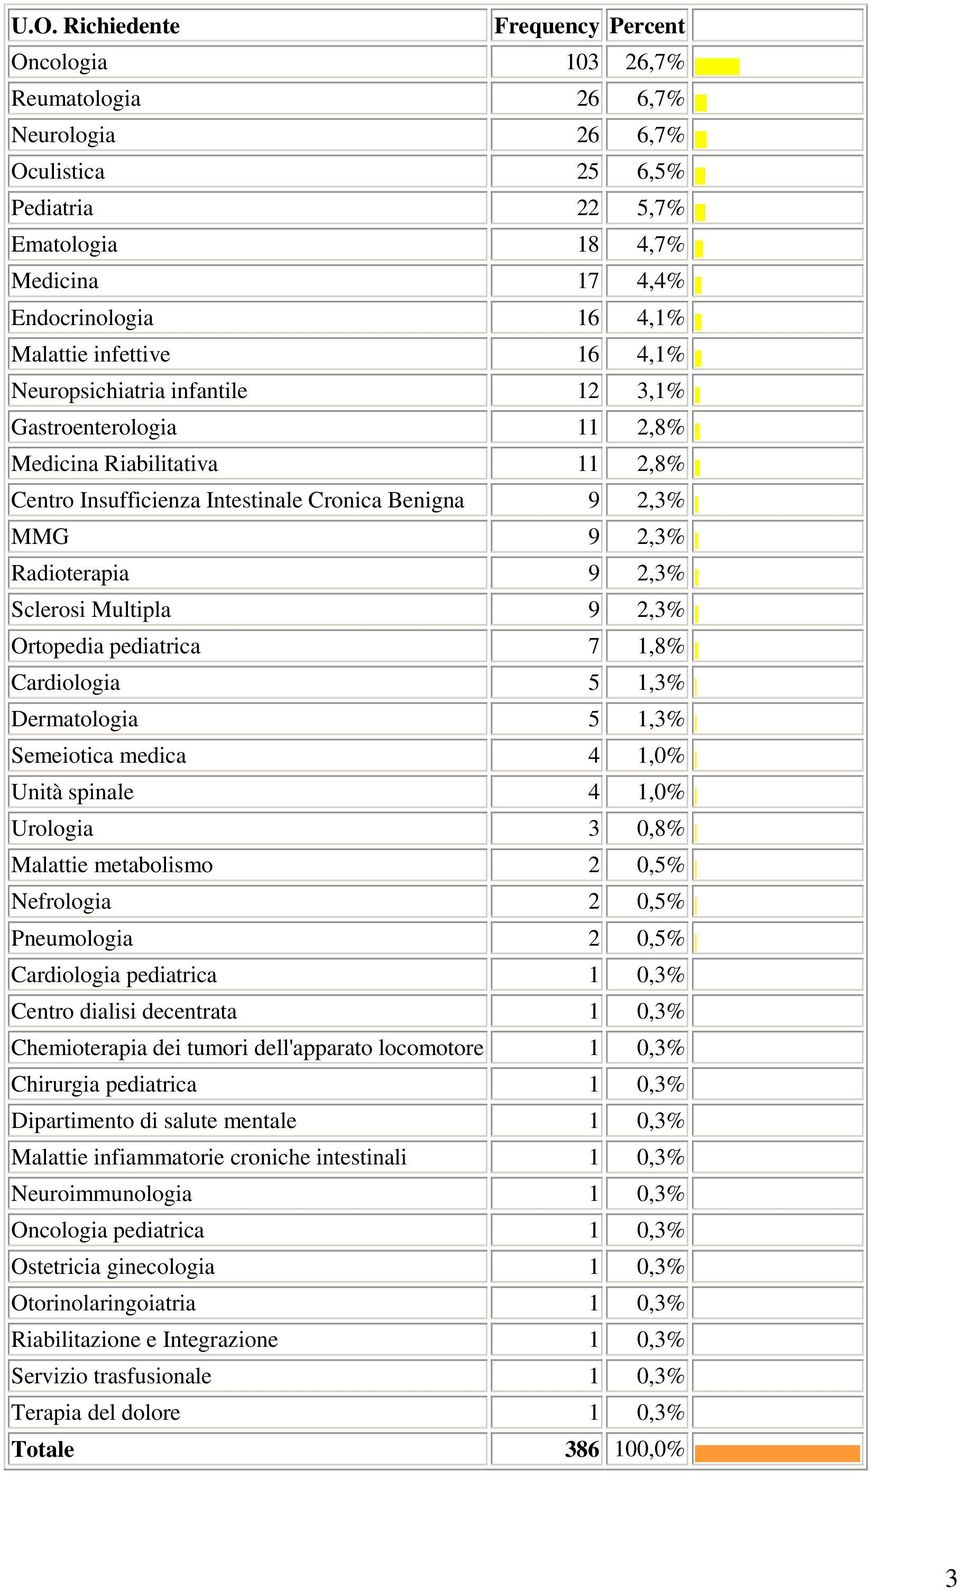 Sclerosi Multipla 9 2,3% Ortopedia pediatrica 7 1,8% Cardiologia 5 1,3% Dermatologia 5 1,3% Semeiotica medica 4 1,0% Unità spinale 4 1,0% Urologia 3 0,8% Malattie metabolismo 2 0,5% Nefrologia 2 0,5%